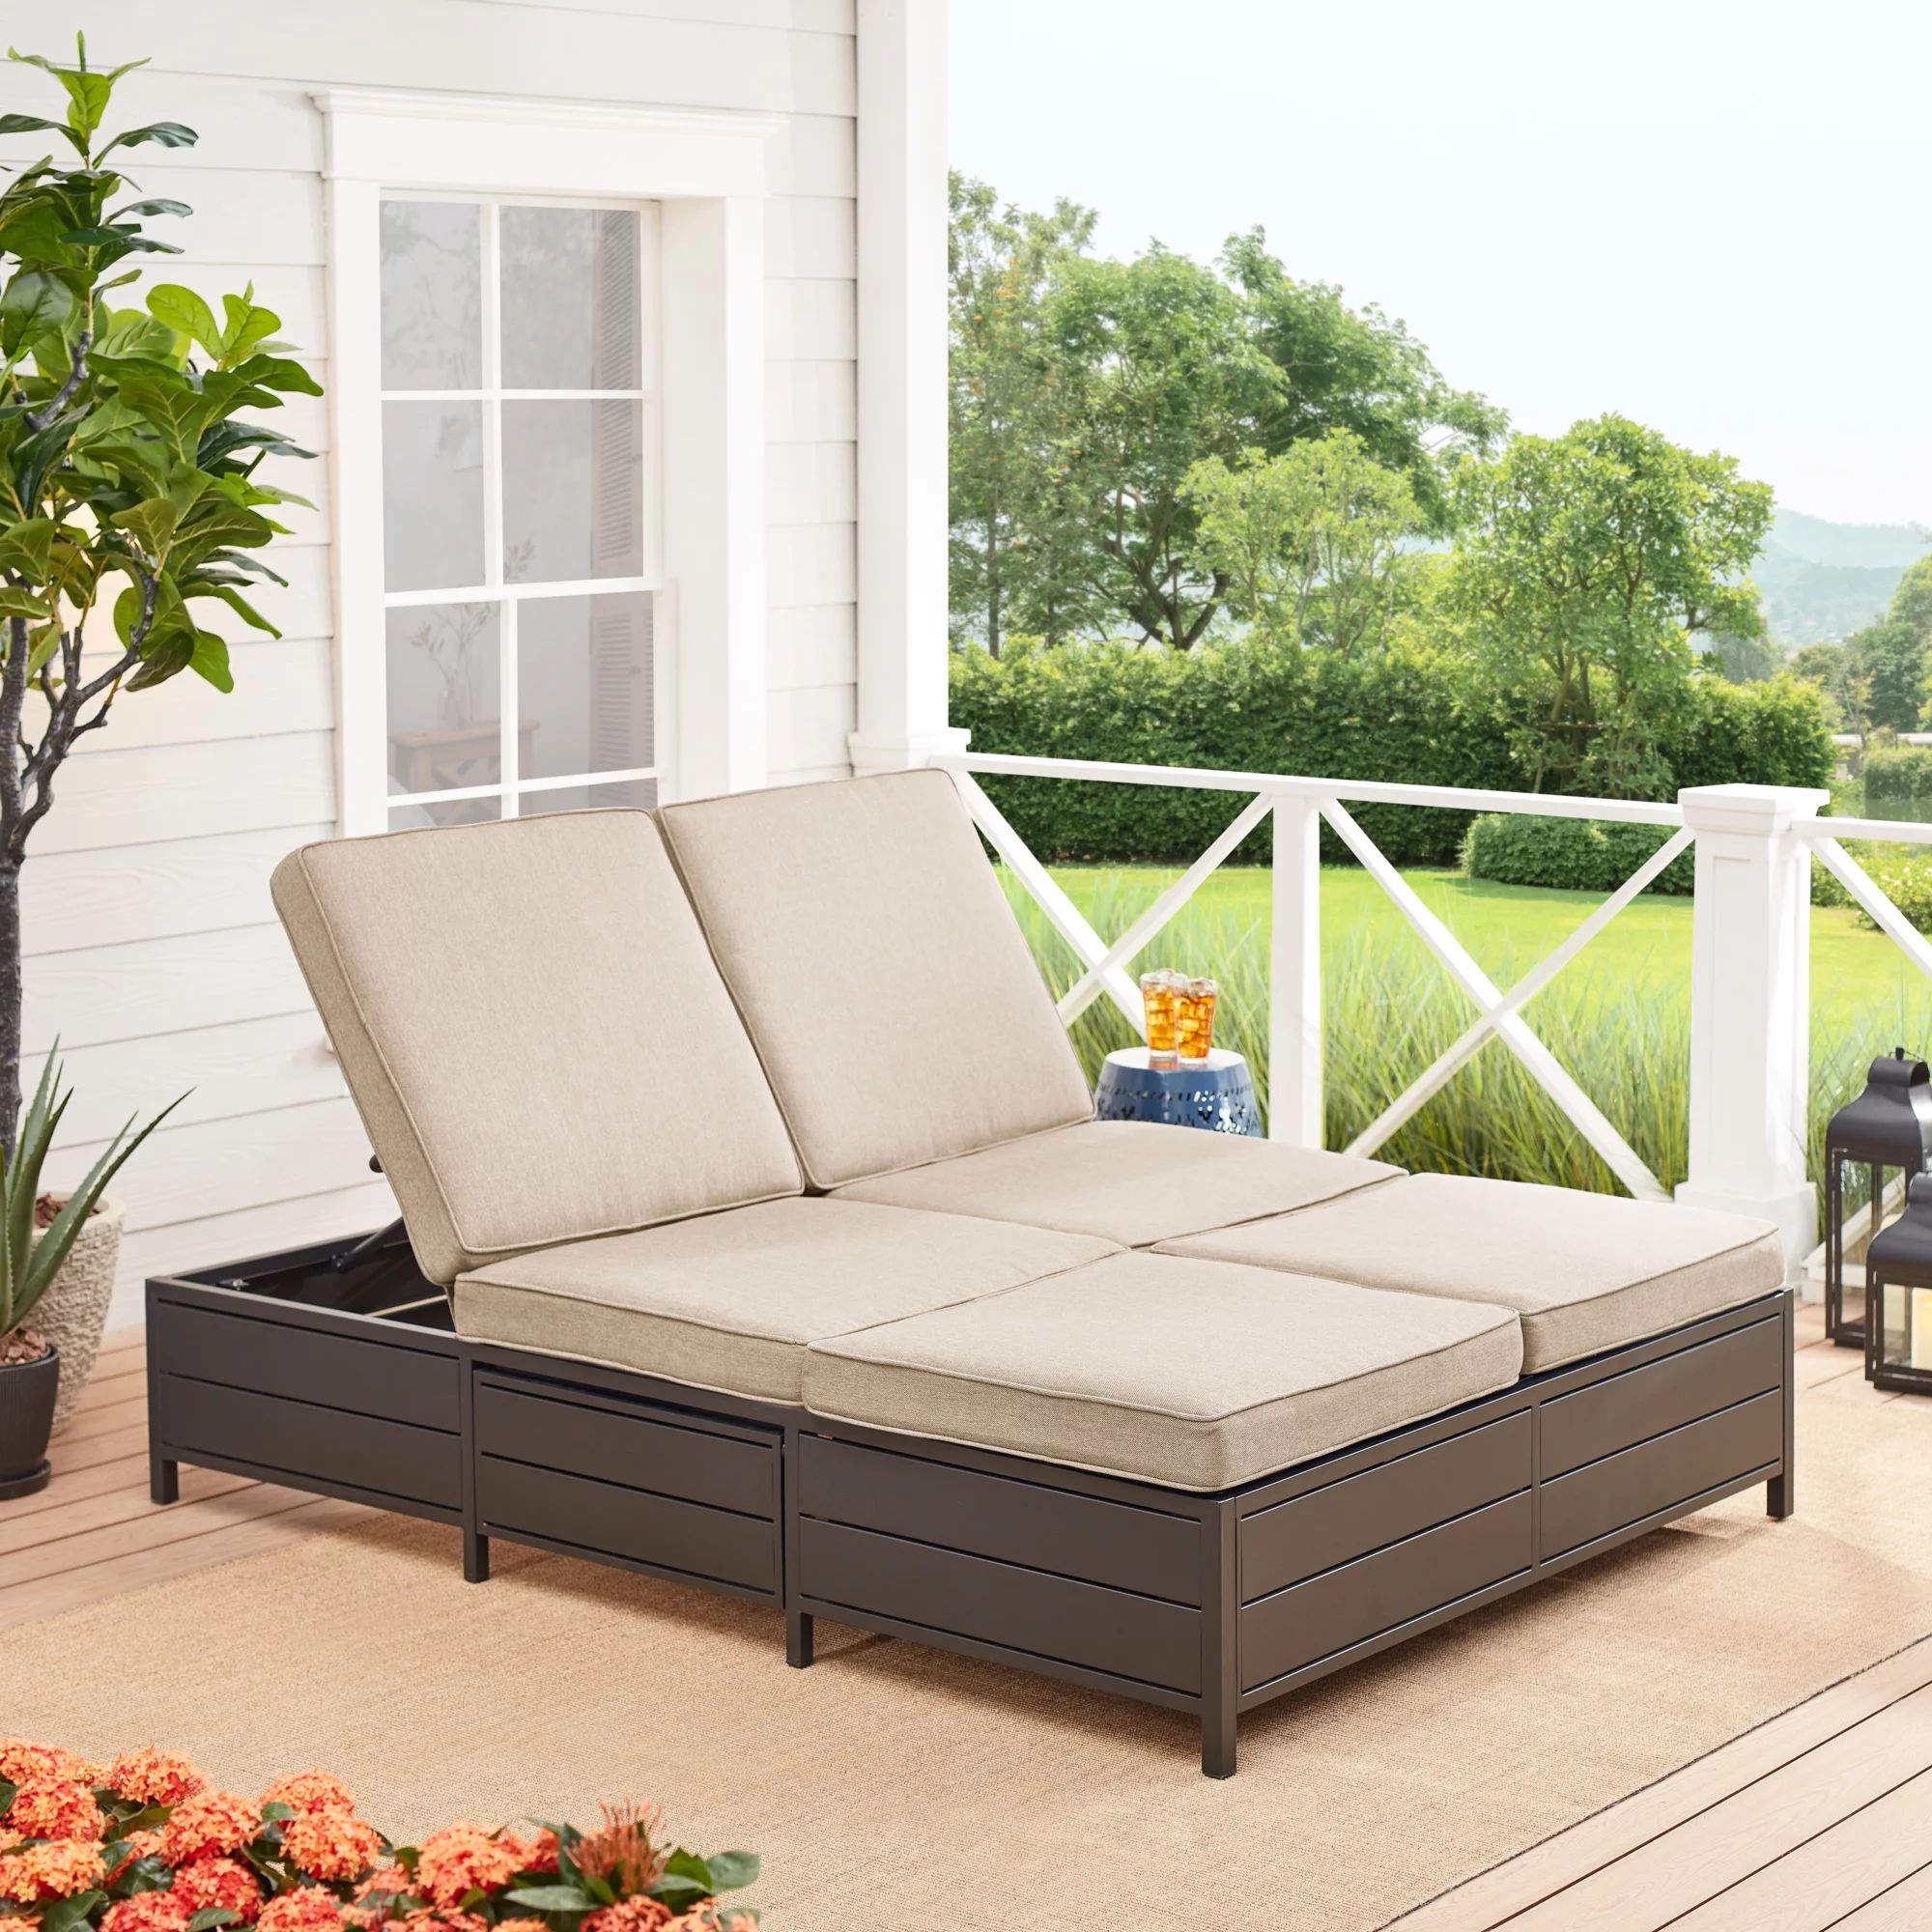 Mainstays Cushion Steel Outdoor Chaise Lounge - Tan/Black - Walmart.com | Walmart (US)